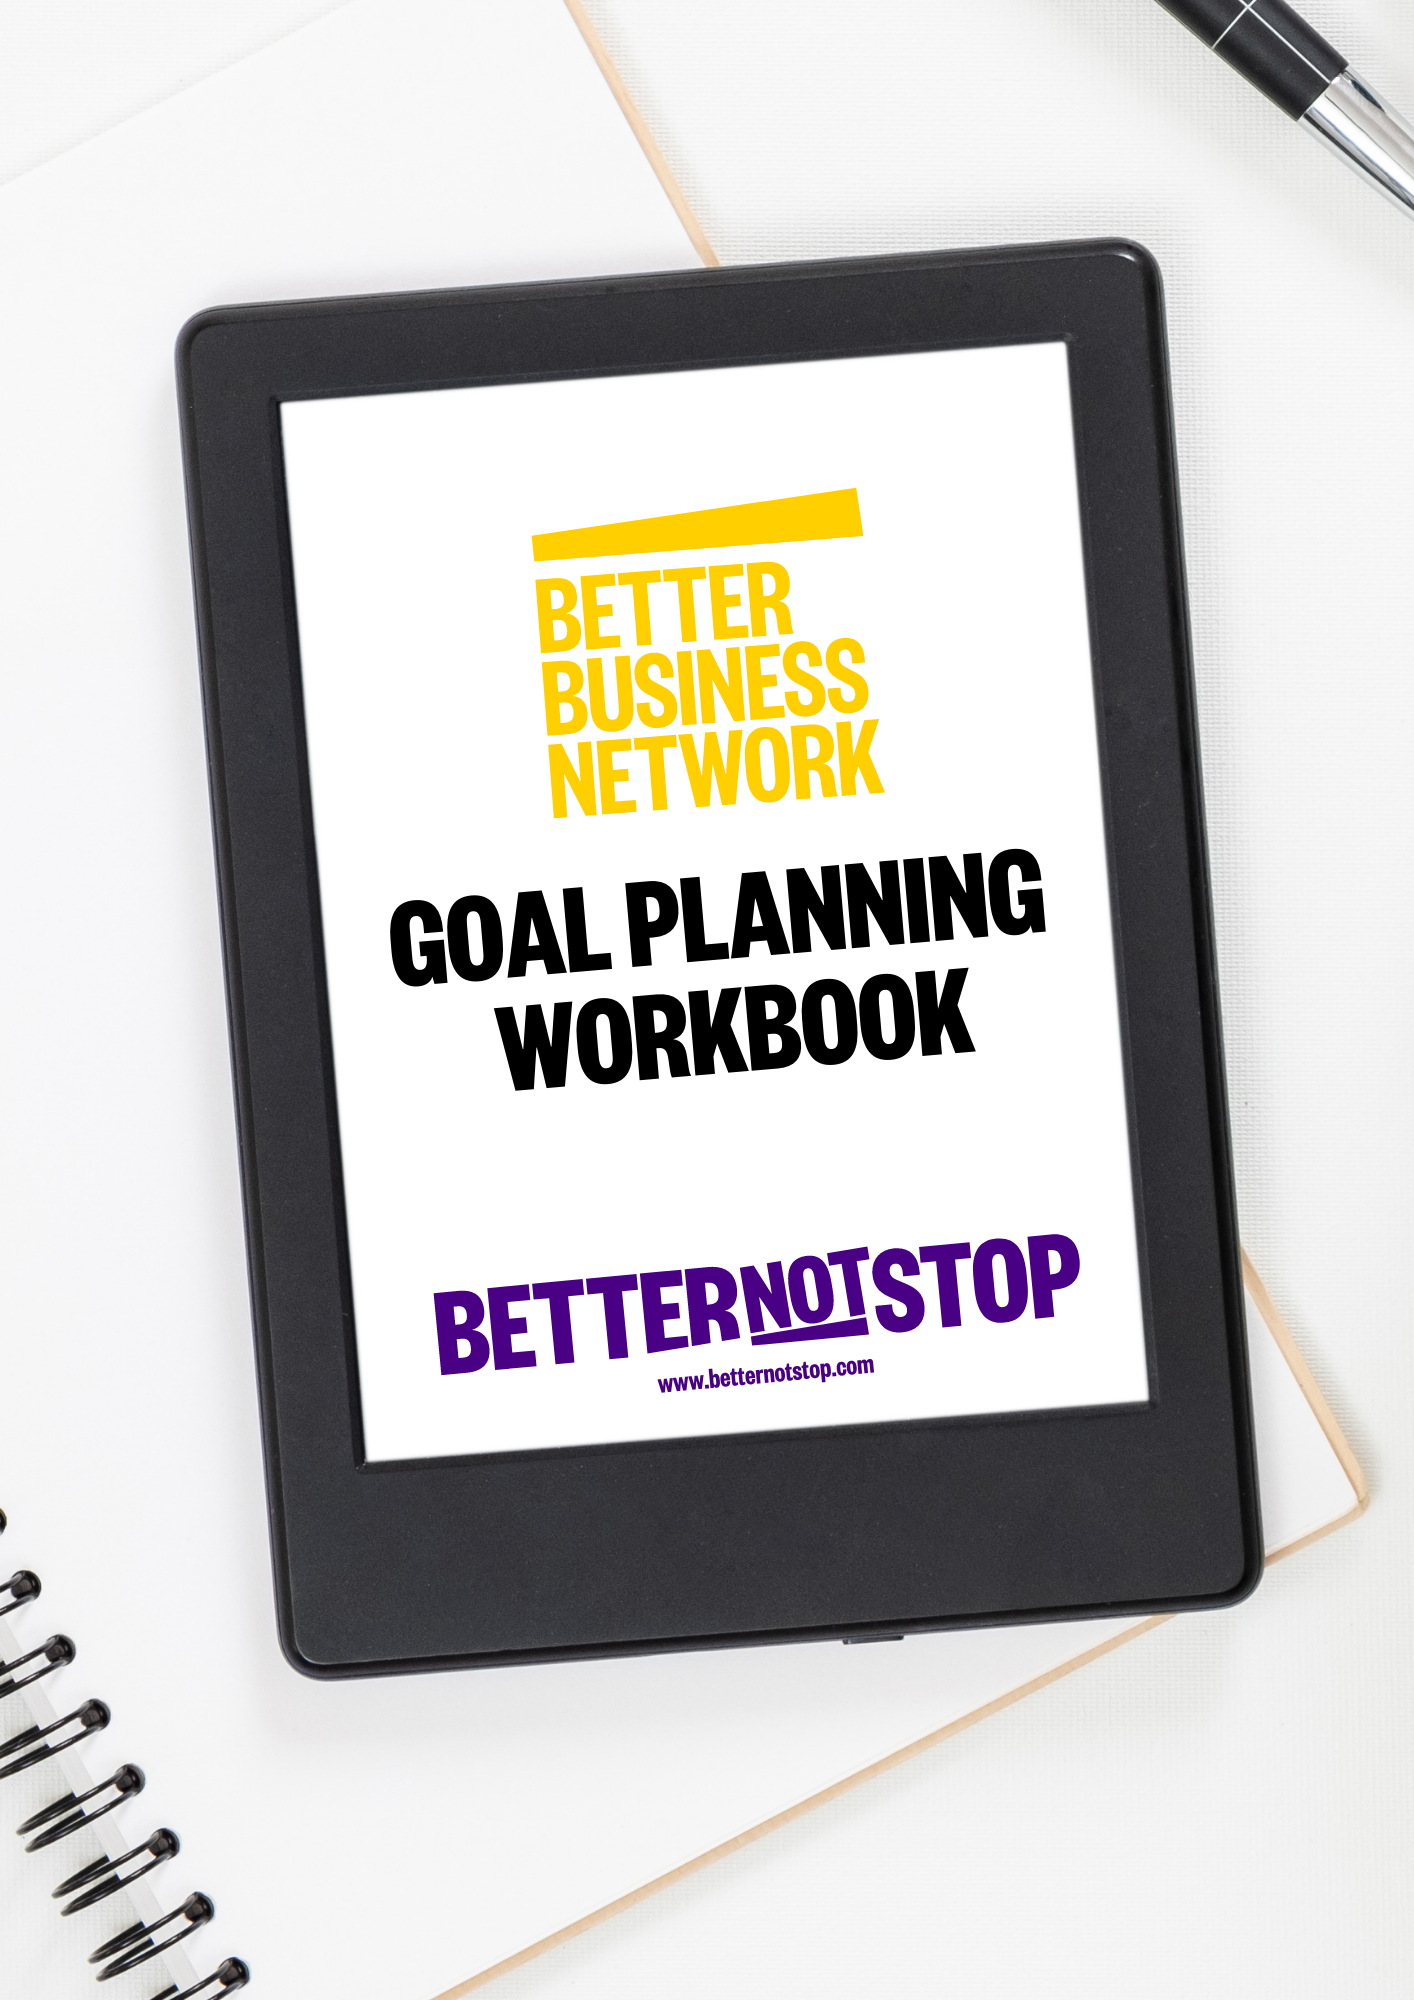 Goal Setting Workbook on iPad